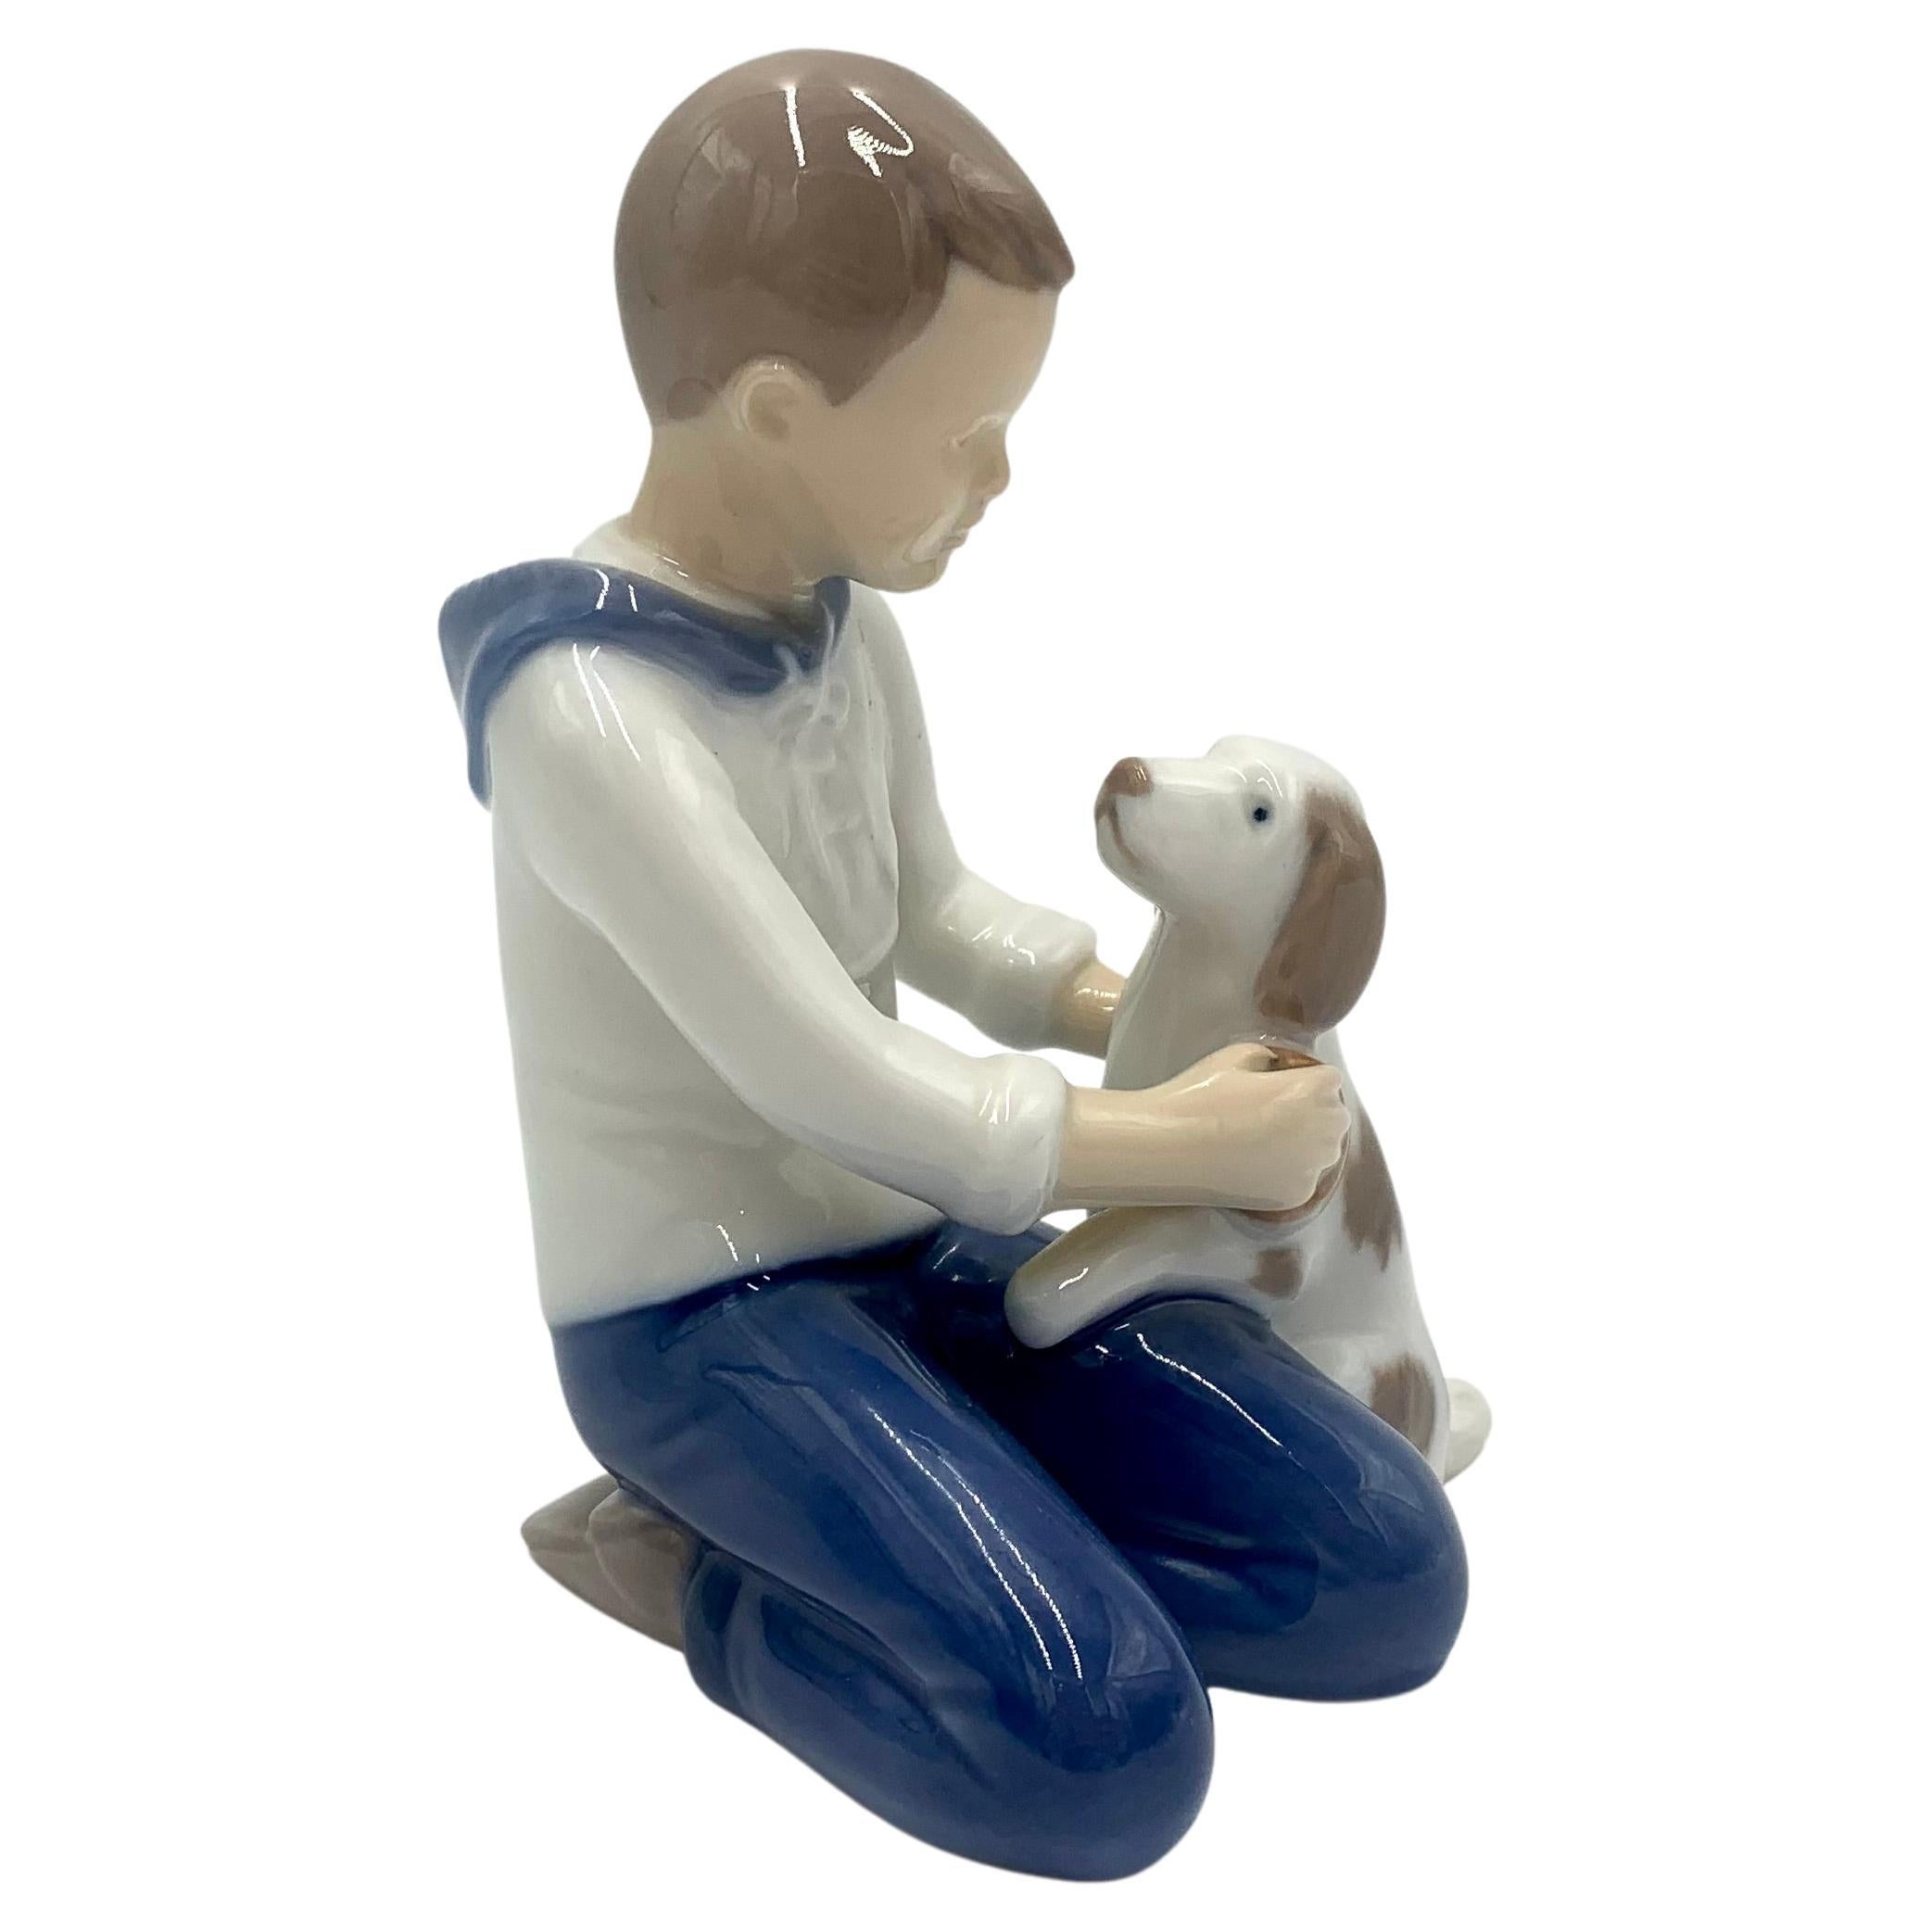 Porcelain Figurine of a Boy with a Dog, Bing & Grondahl, Denmark, 1950s